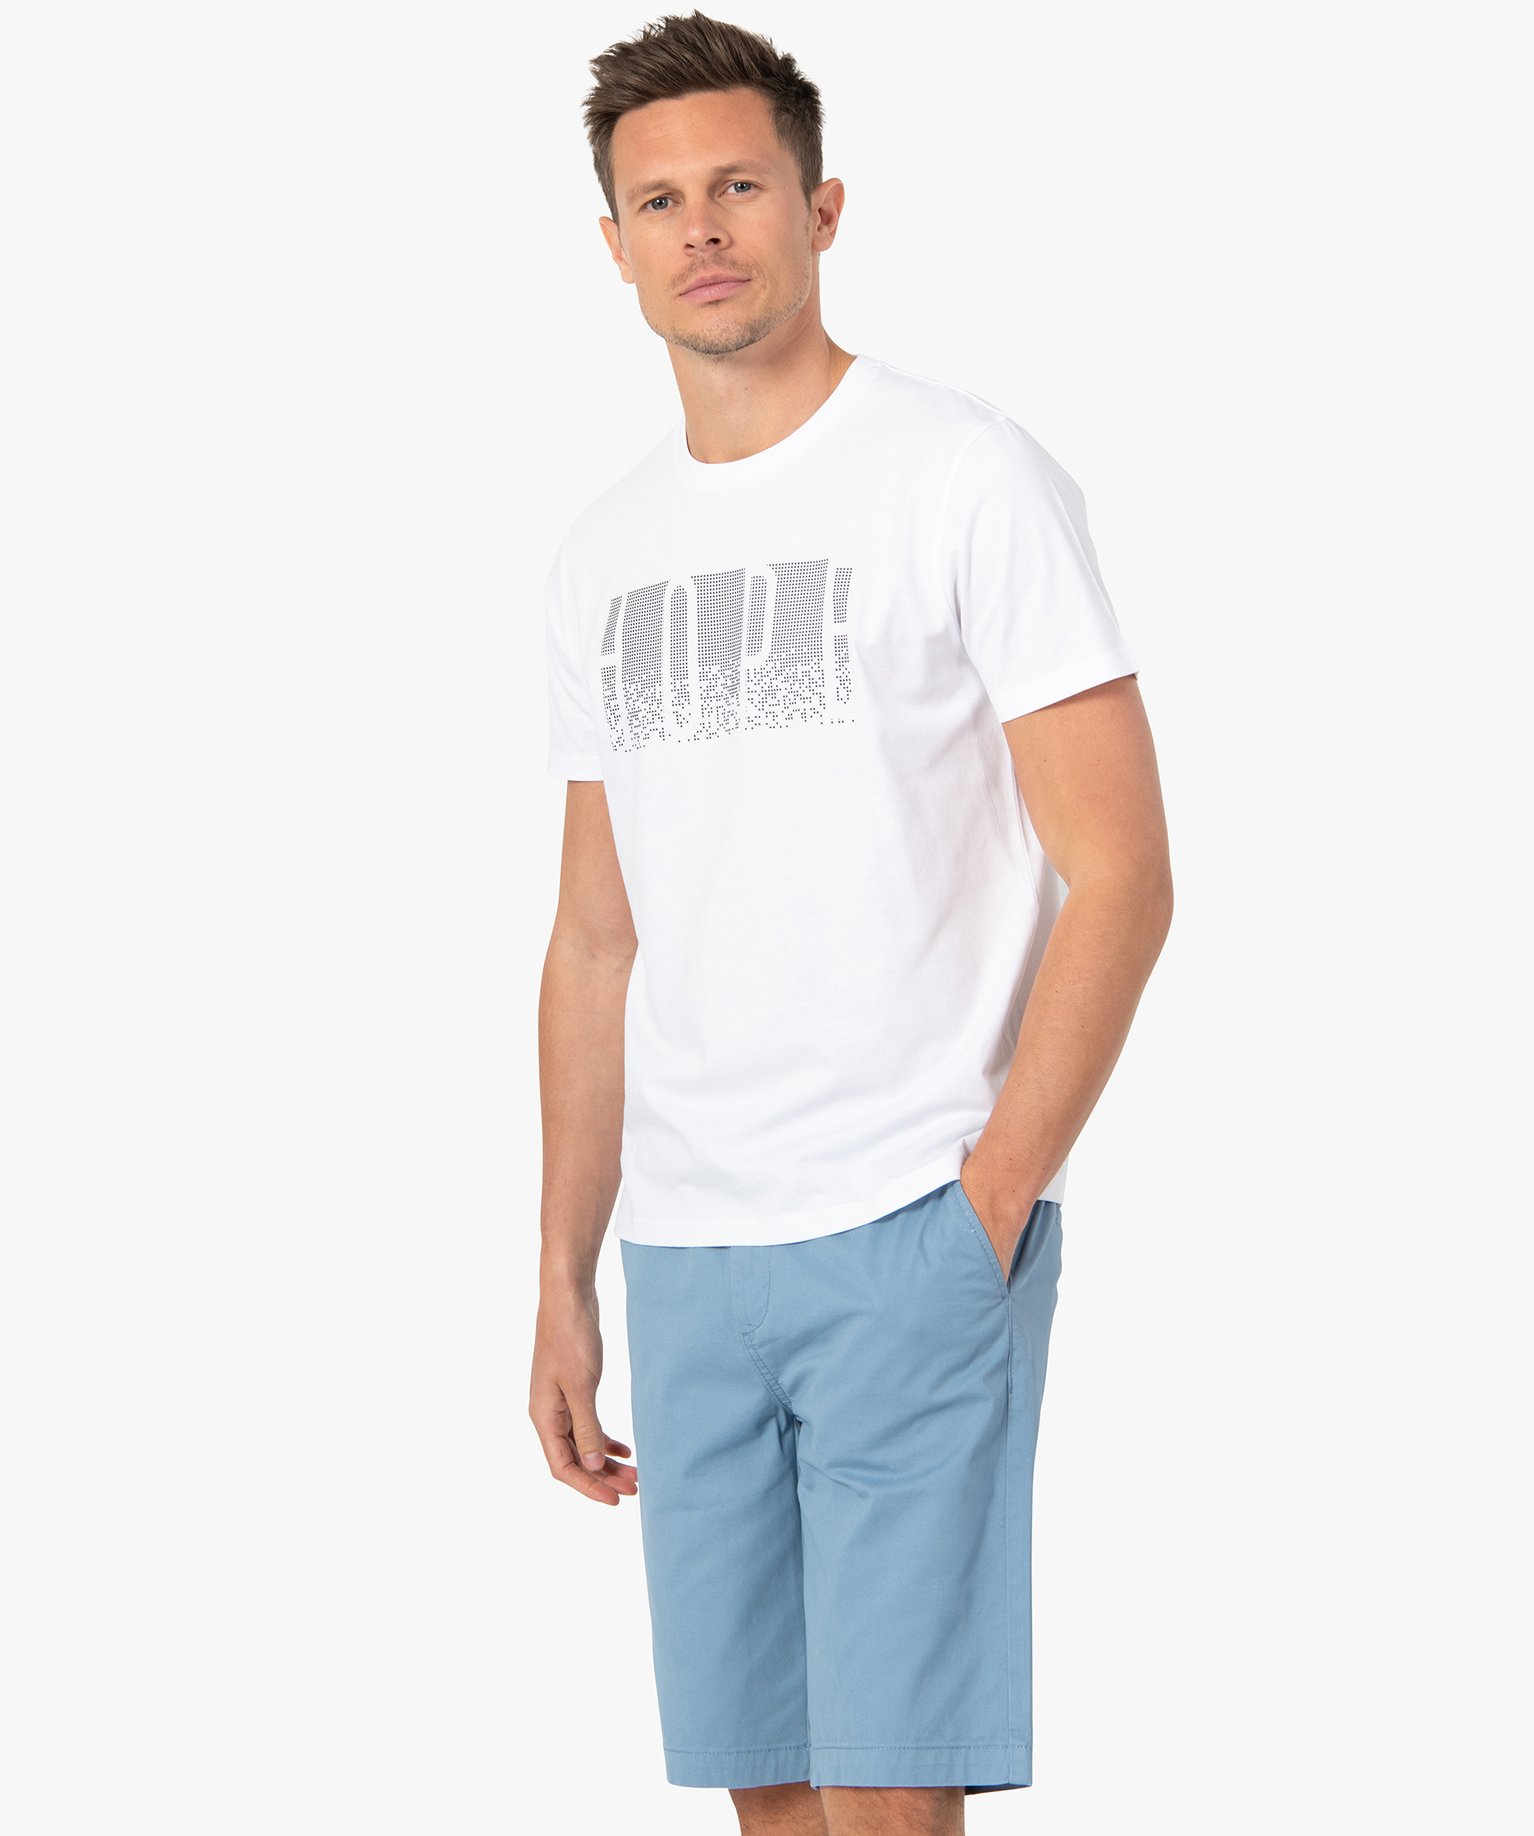 tee-shirt homme a manches courtes et motif en relief blanc tee-shirts